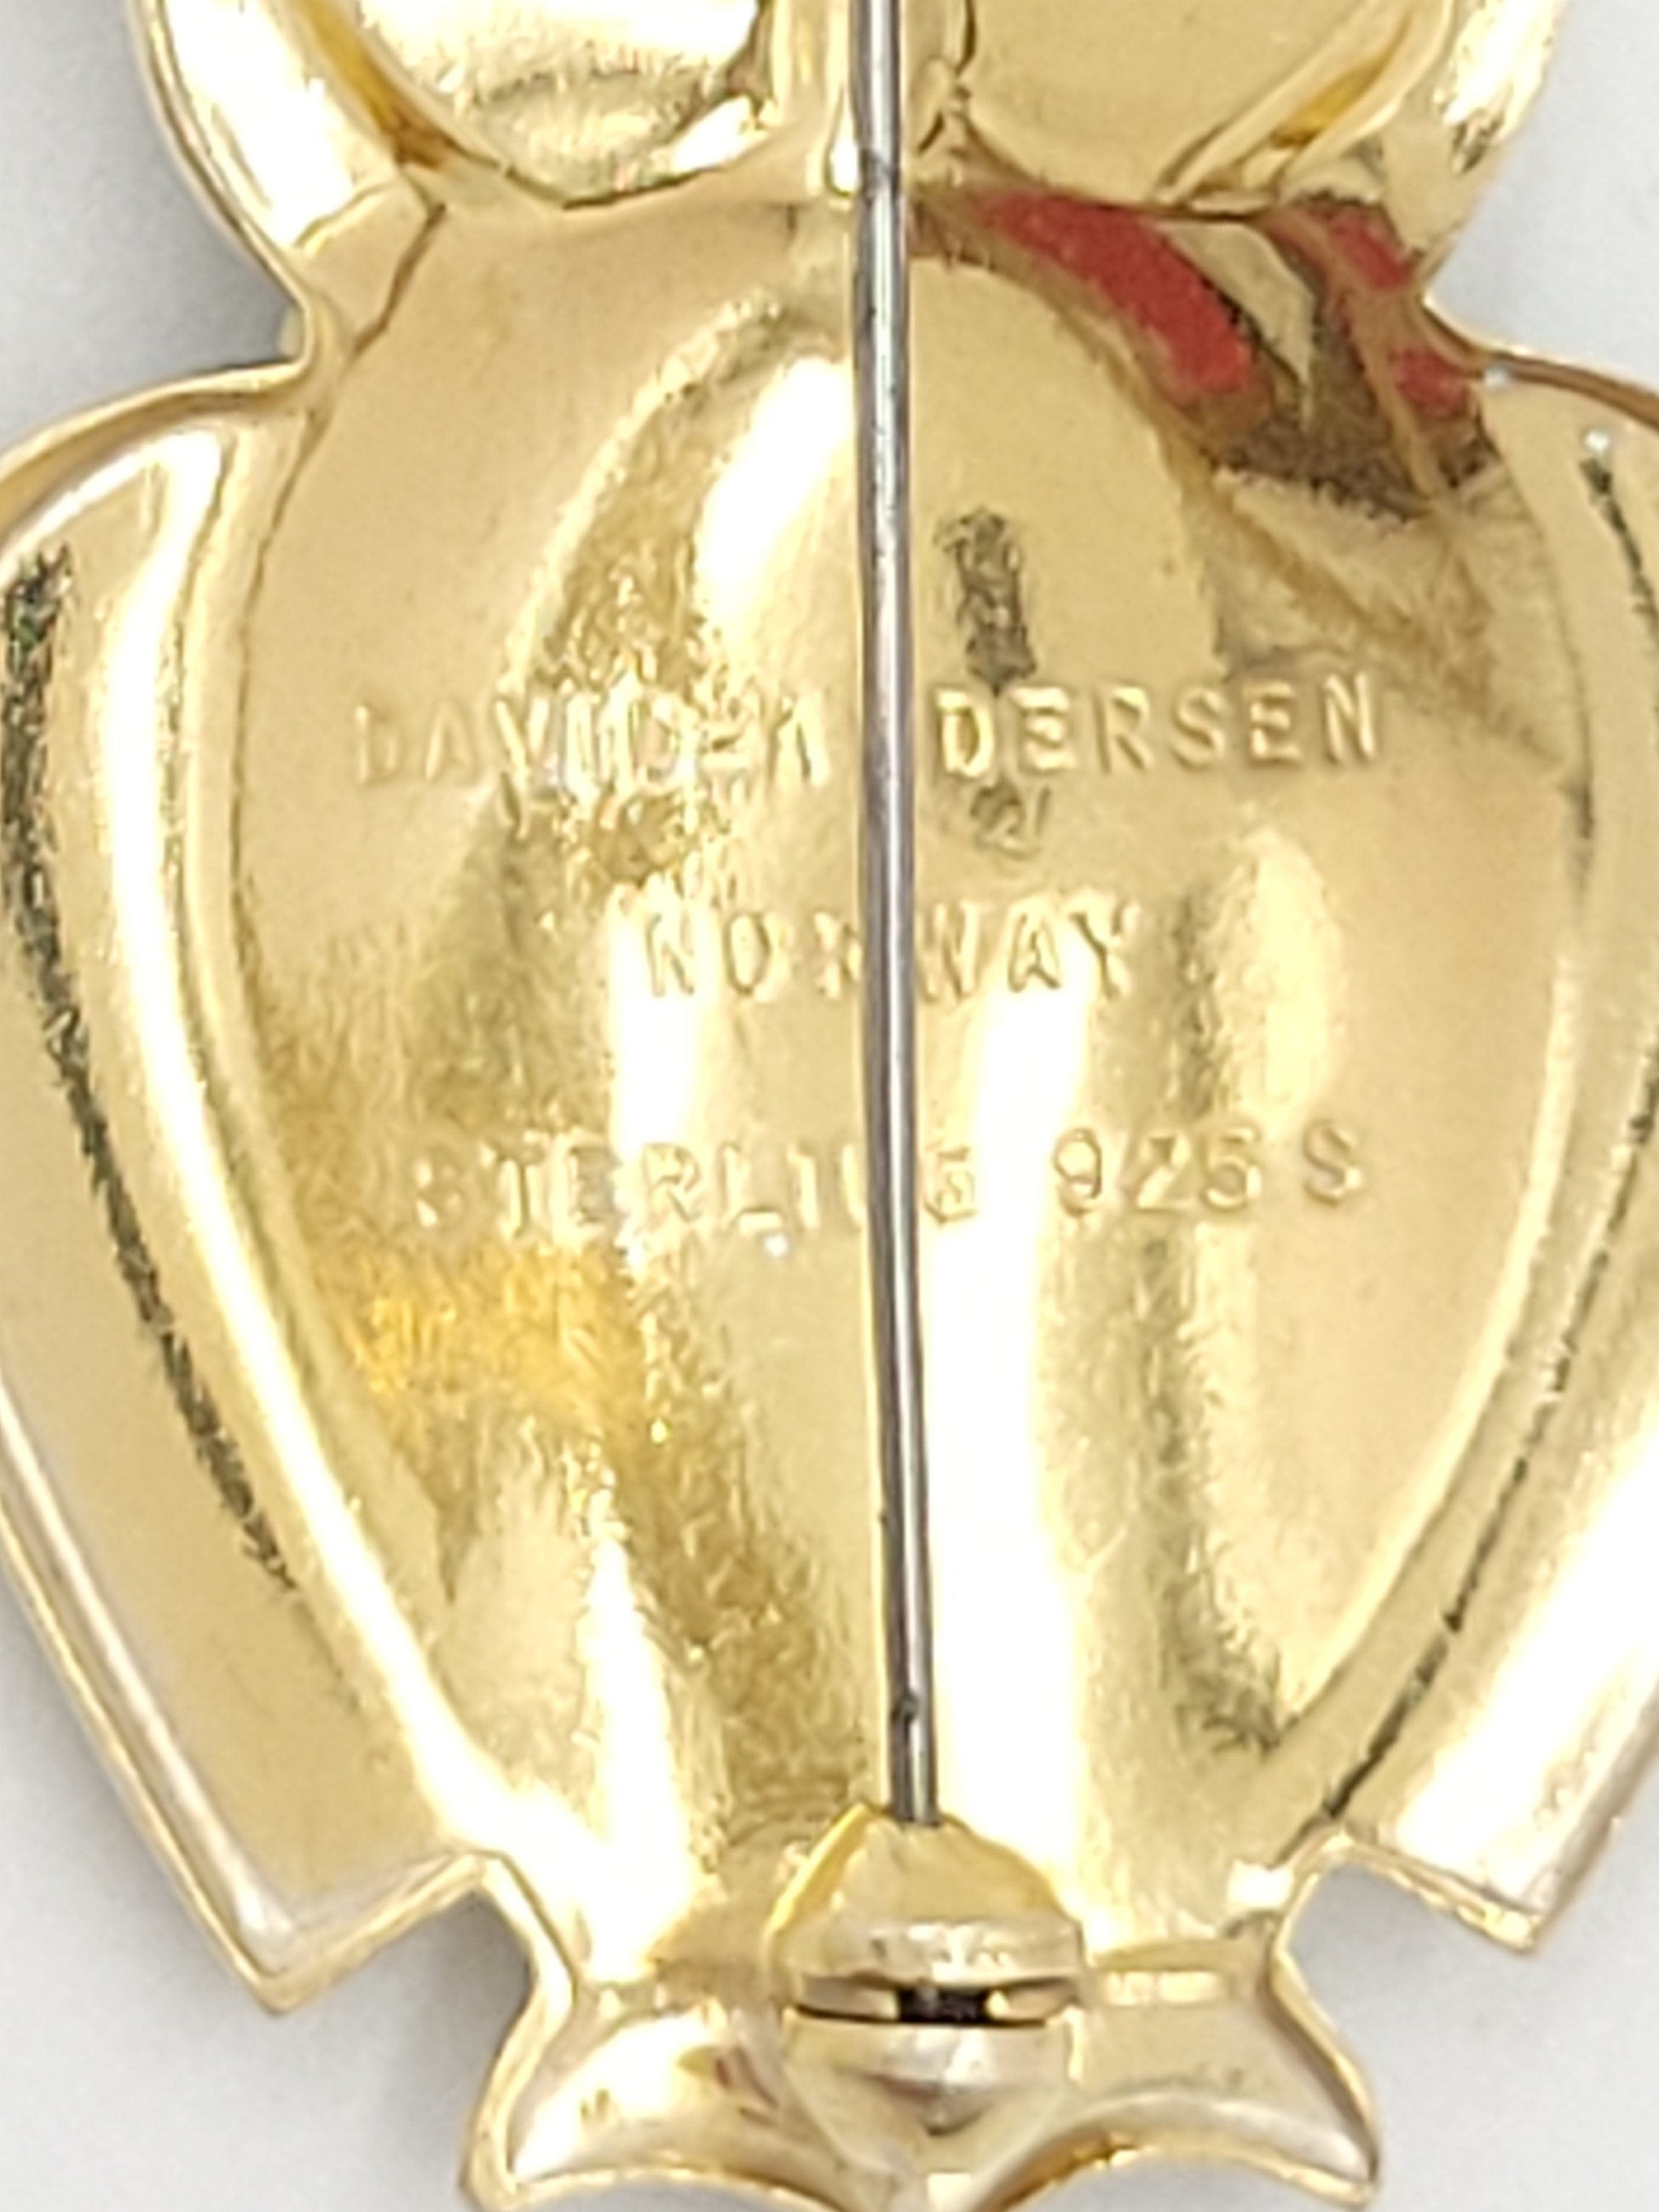 David Andersen Jewelry David Andersen Norway Sterling & Enamel Owl Brooch Pin Pendant Circa 1950's